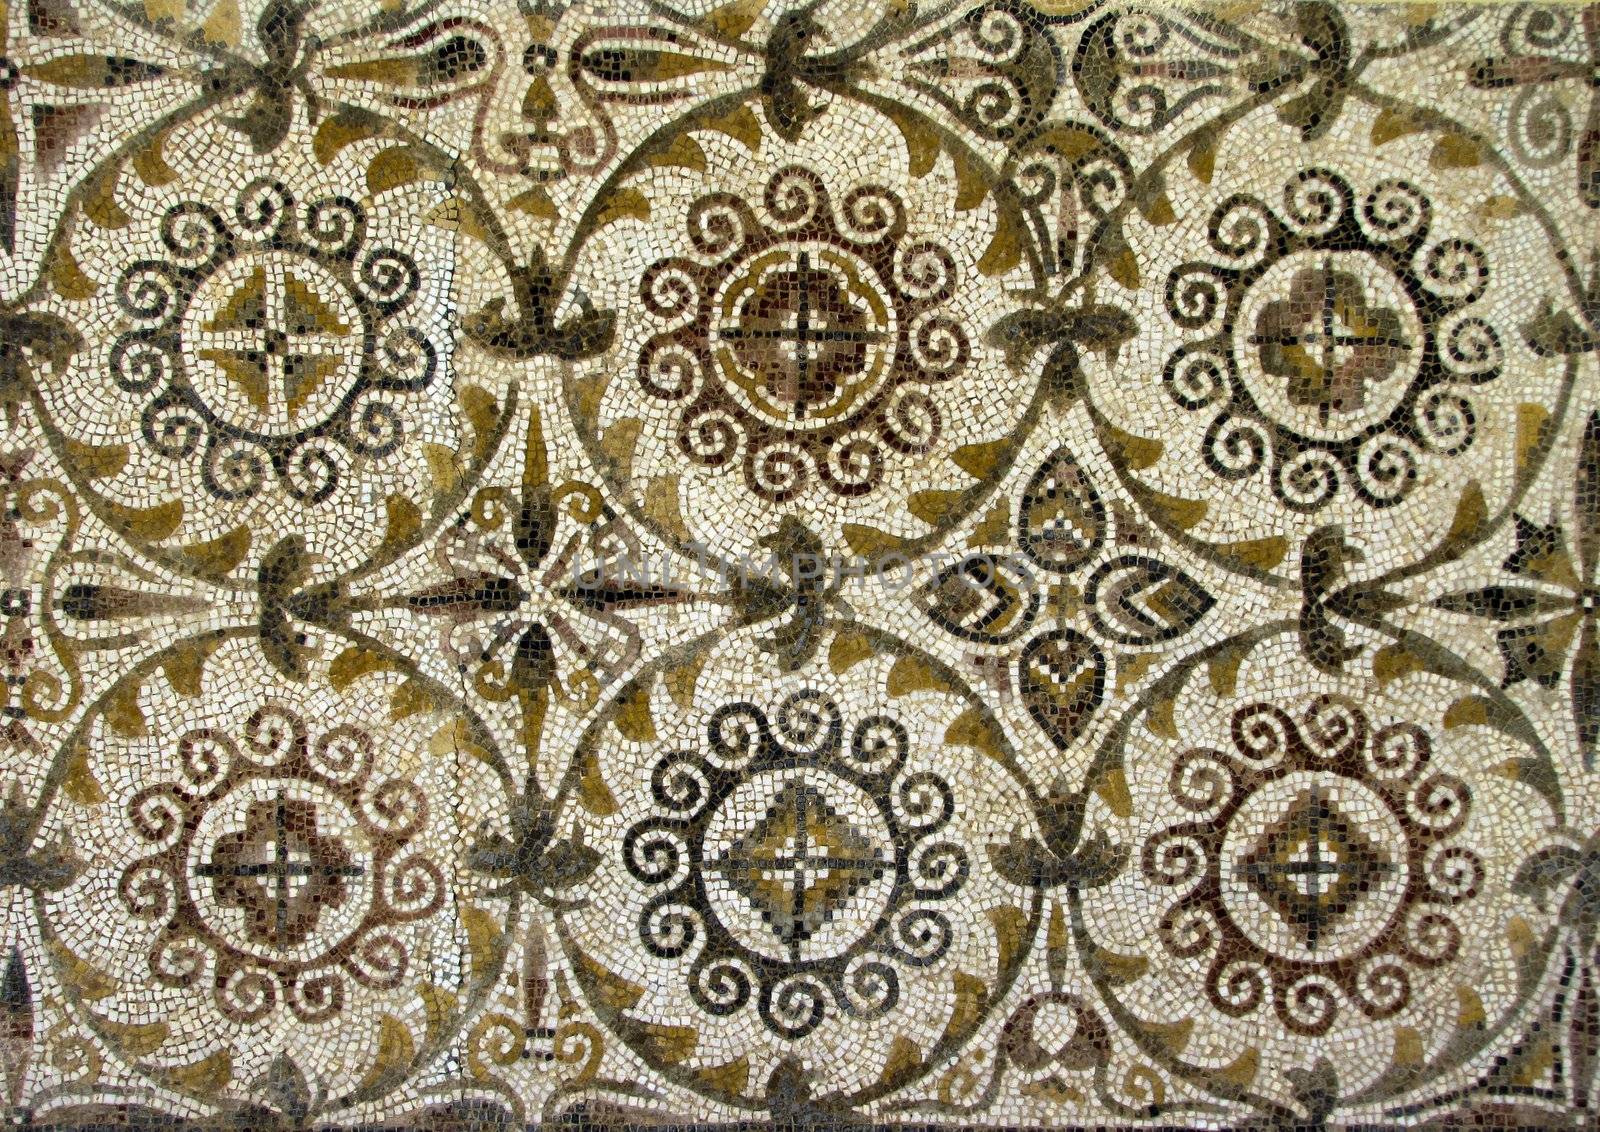 Fragment of roman mosaics from Tunisia